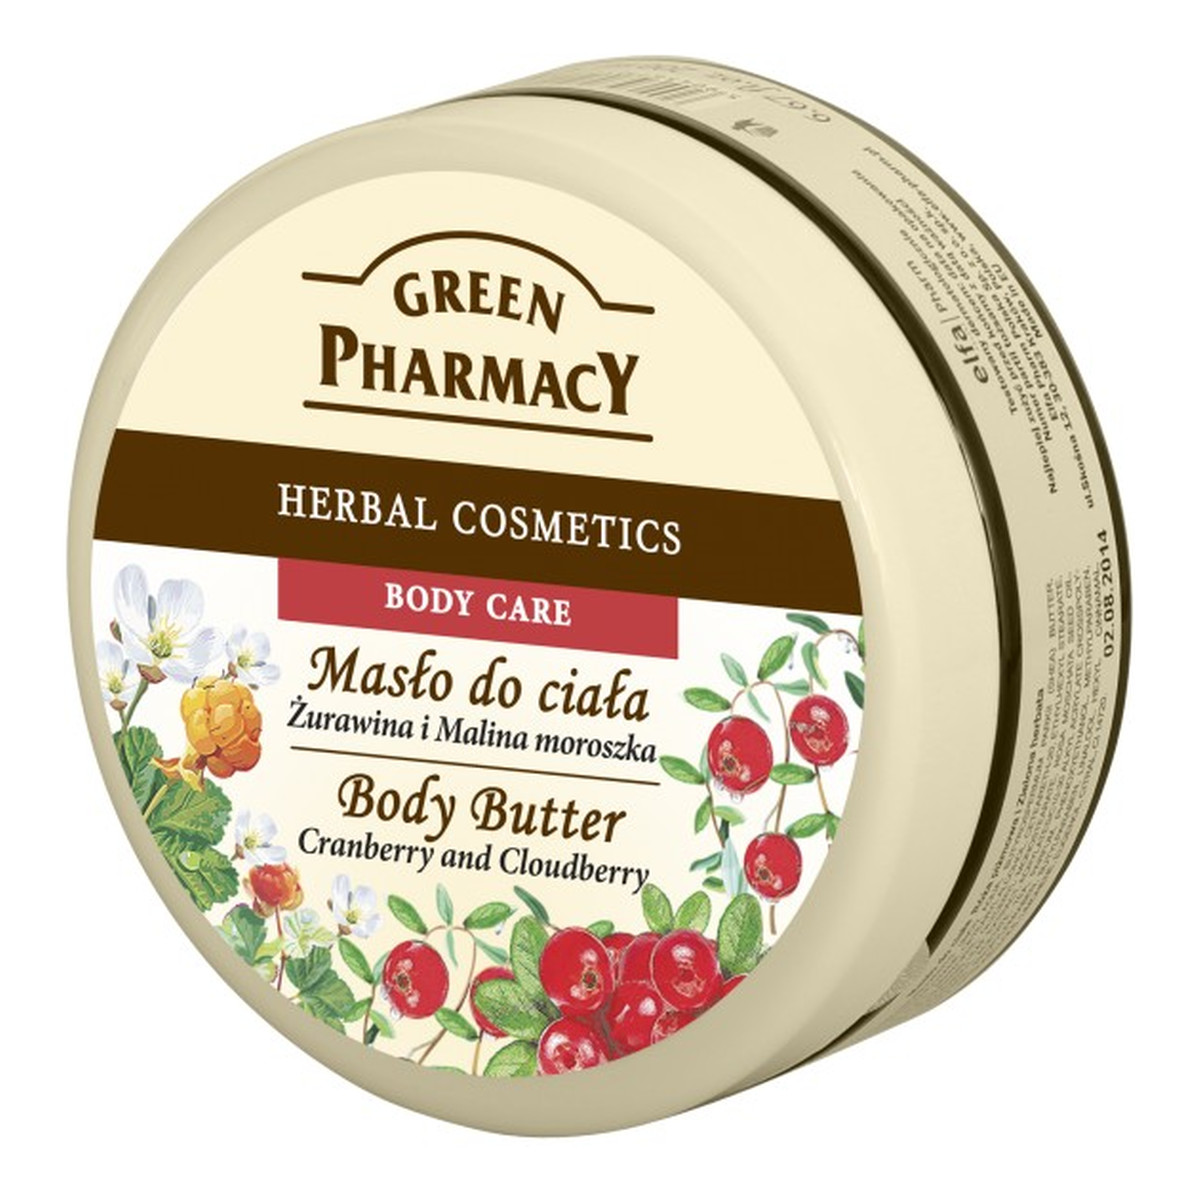 Green Pharmacy Herbal Cosmetics Body Care Masło Do Ciała Żurawina i Malina Moroszka 200ml